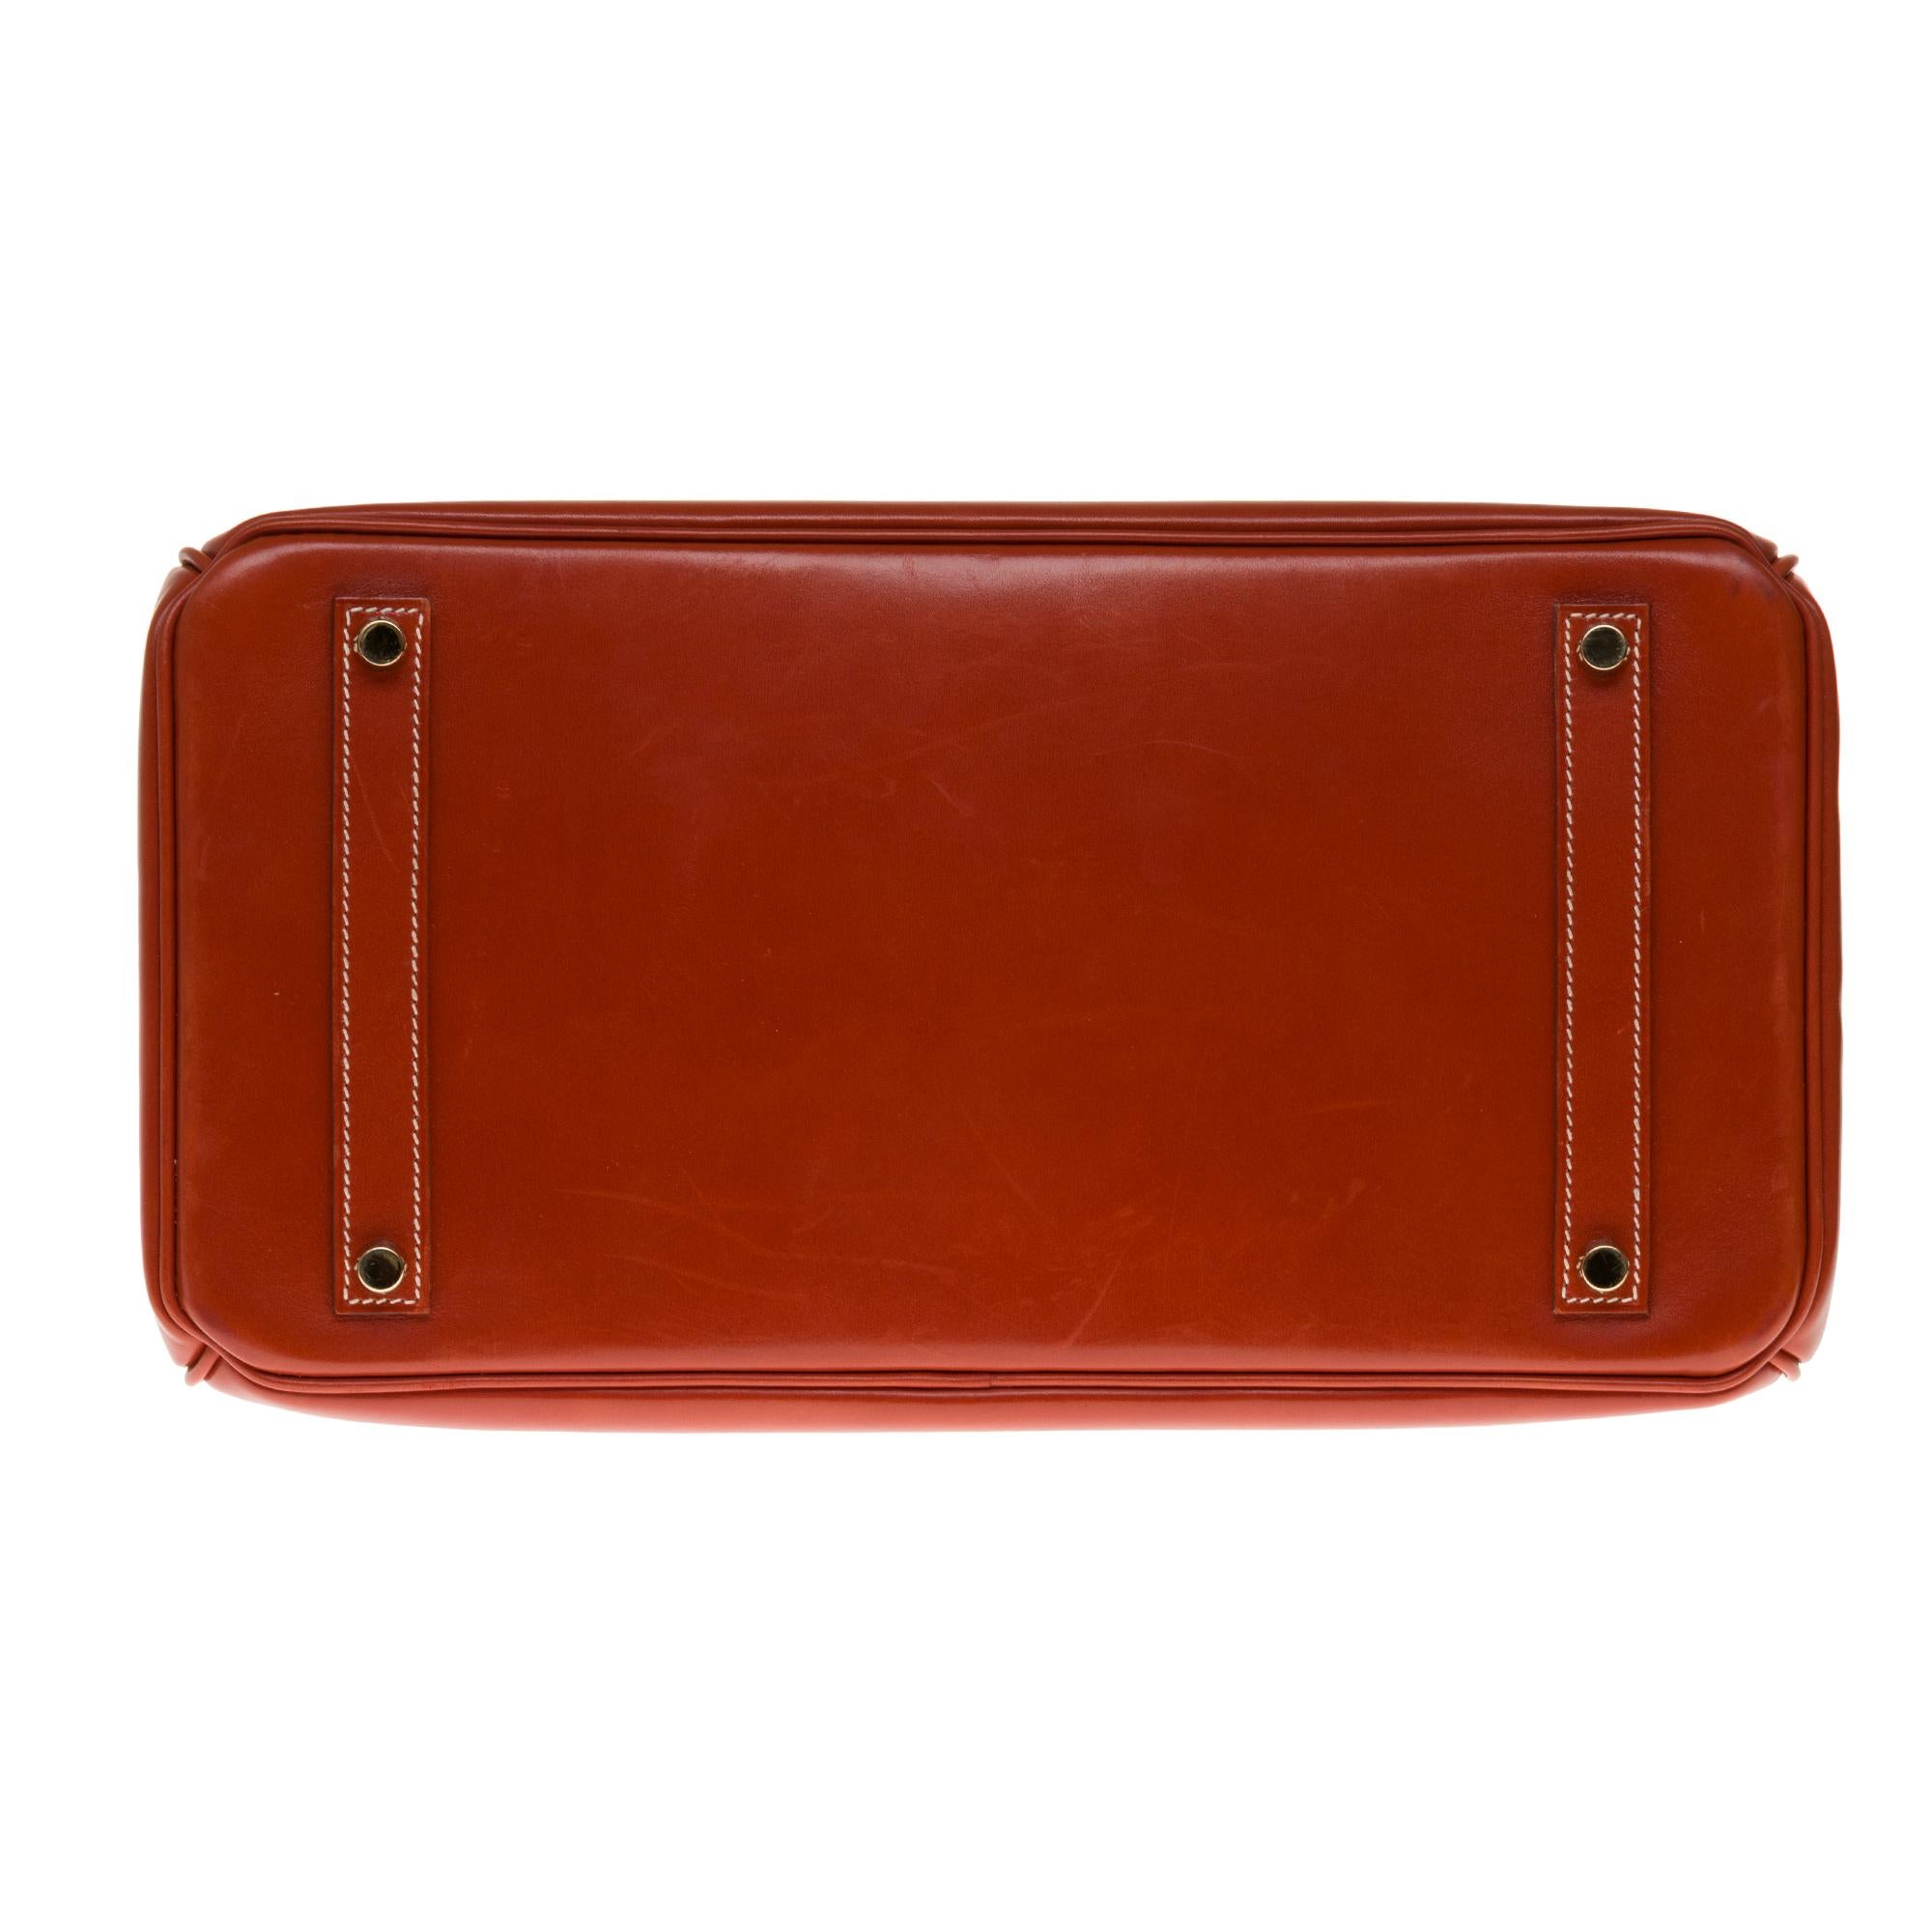 RARE Hermès Birkin 30 handbag in brick box calf leather and gold hardware 2